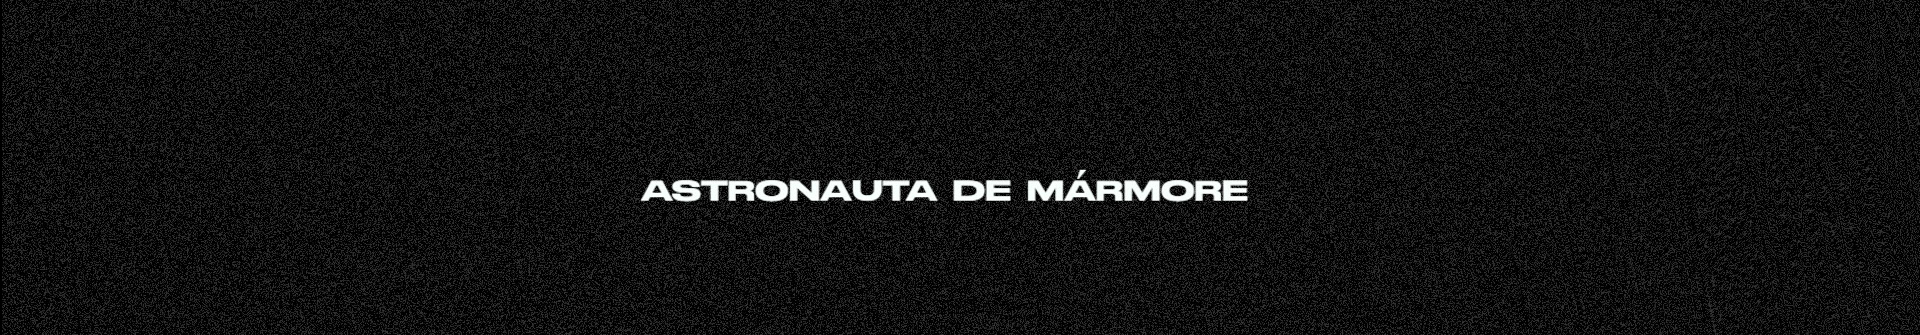 ASTRONAUTA DE MÁRMORE's profile banner